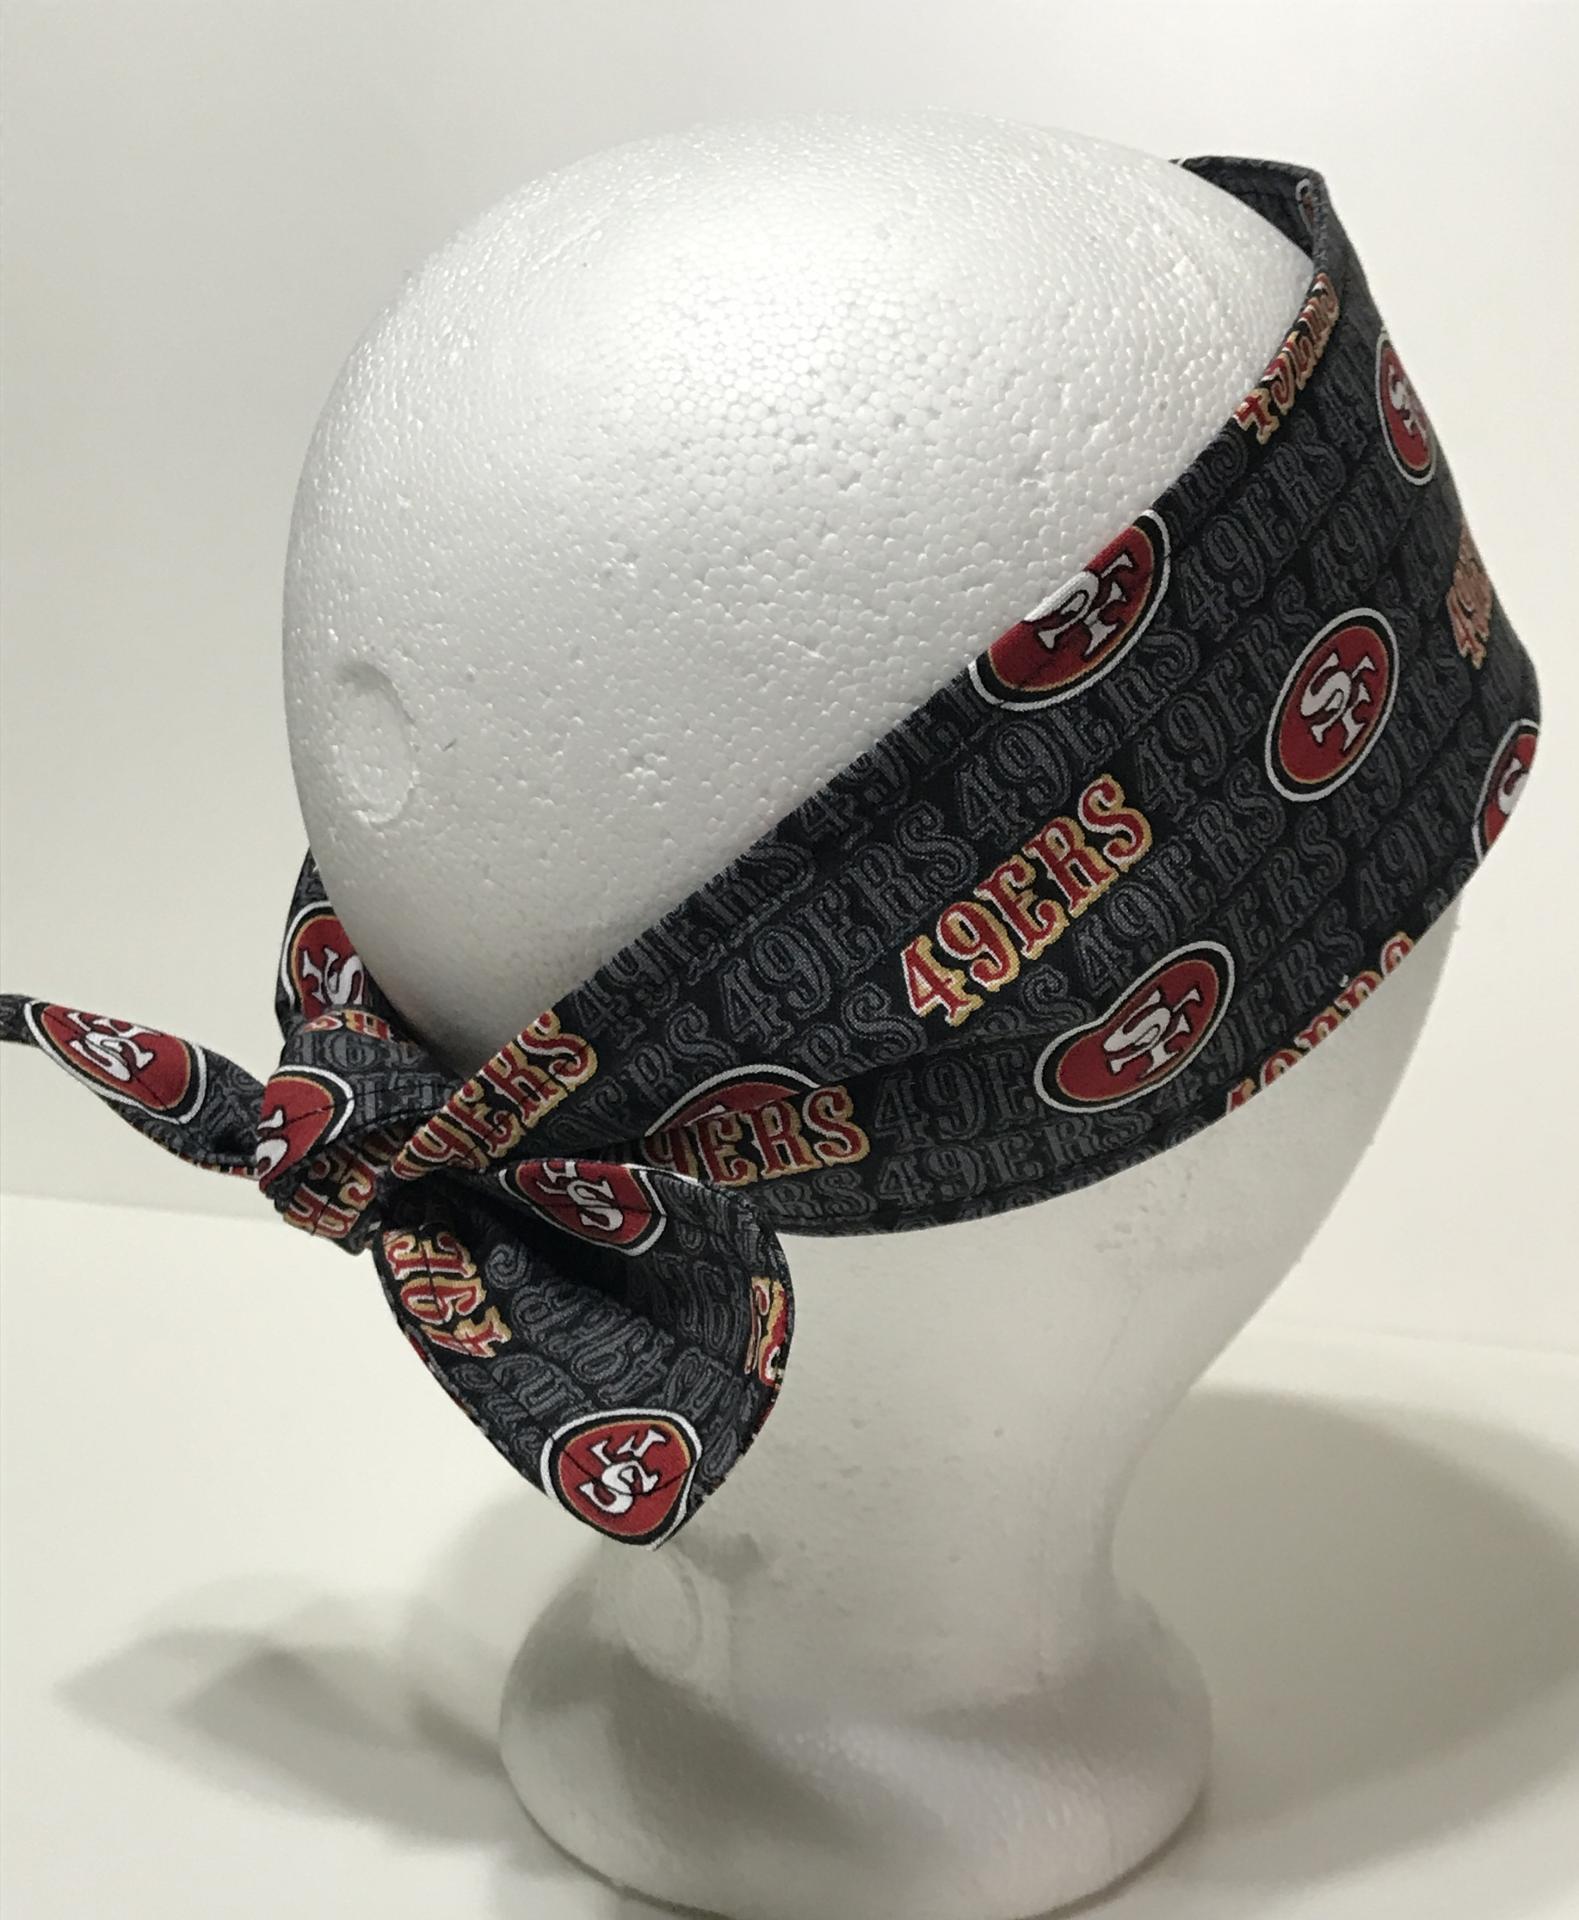 3” wide San Francisco 49ers hair tie, black grey red gold white, hair wrap, headband, pin up, self tie, scarf, neckerchief, retro, rockabilly